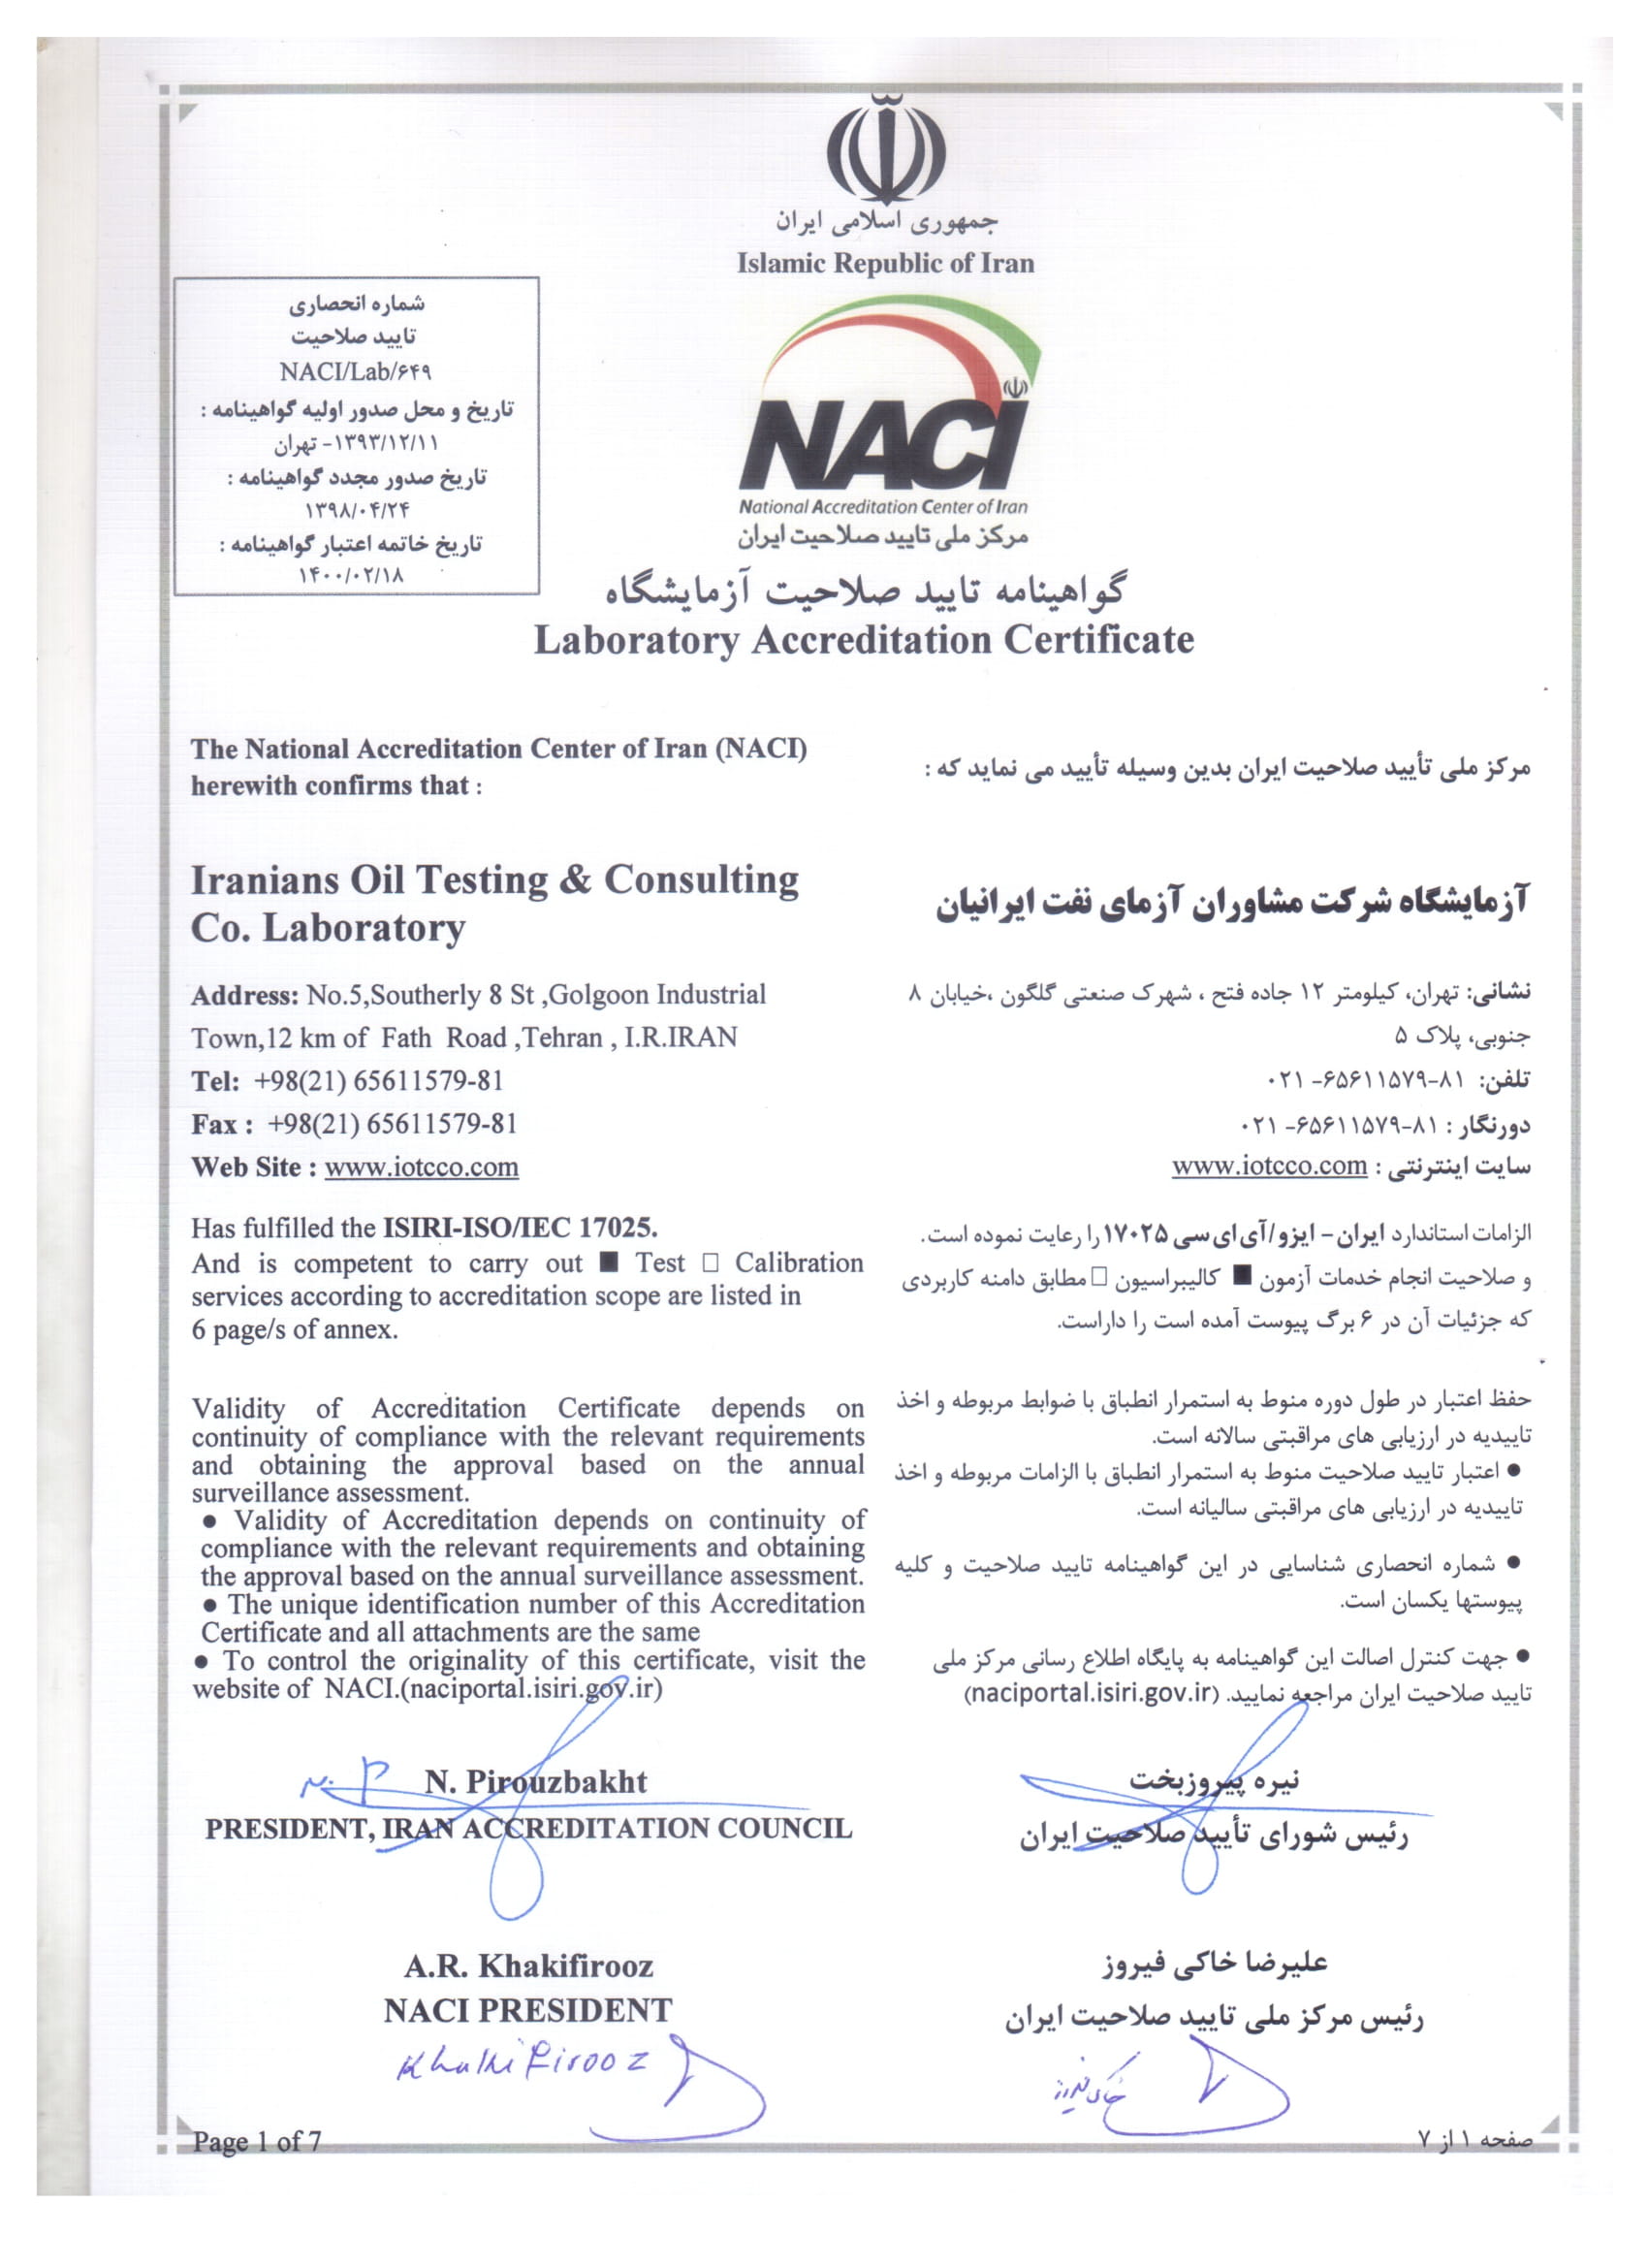 Laboratory Accreditation Certificate ISO/IEC 17025